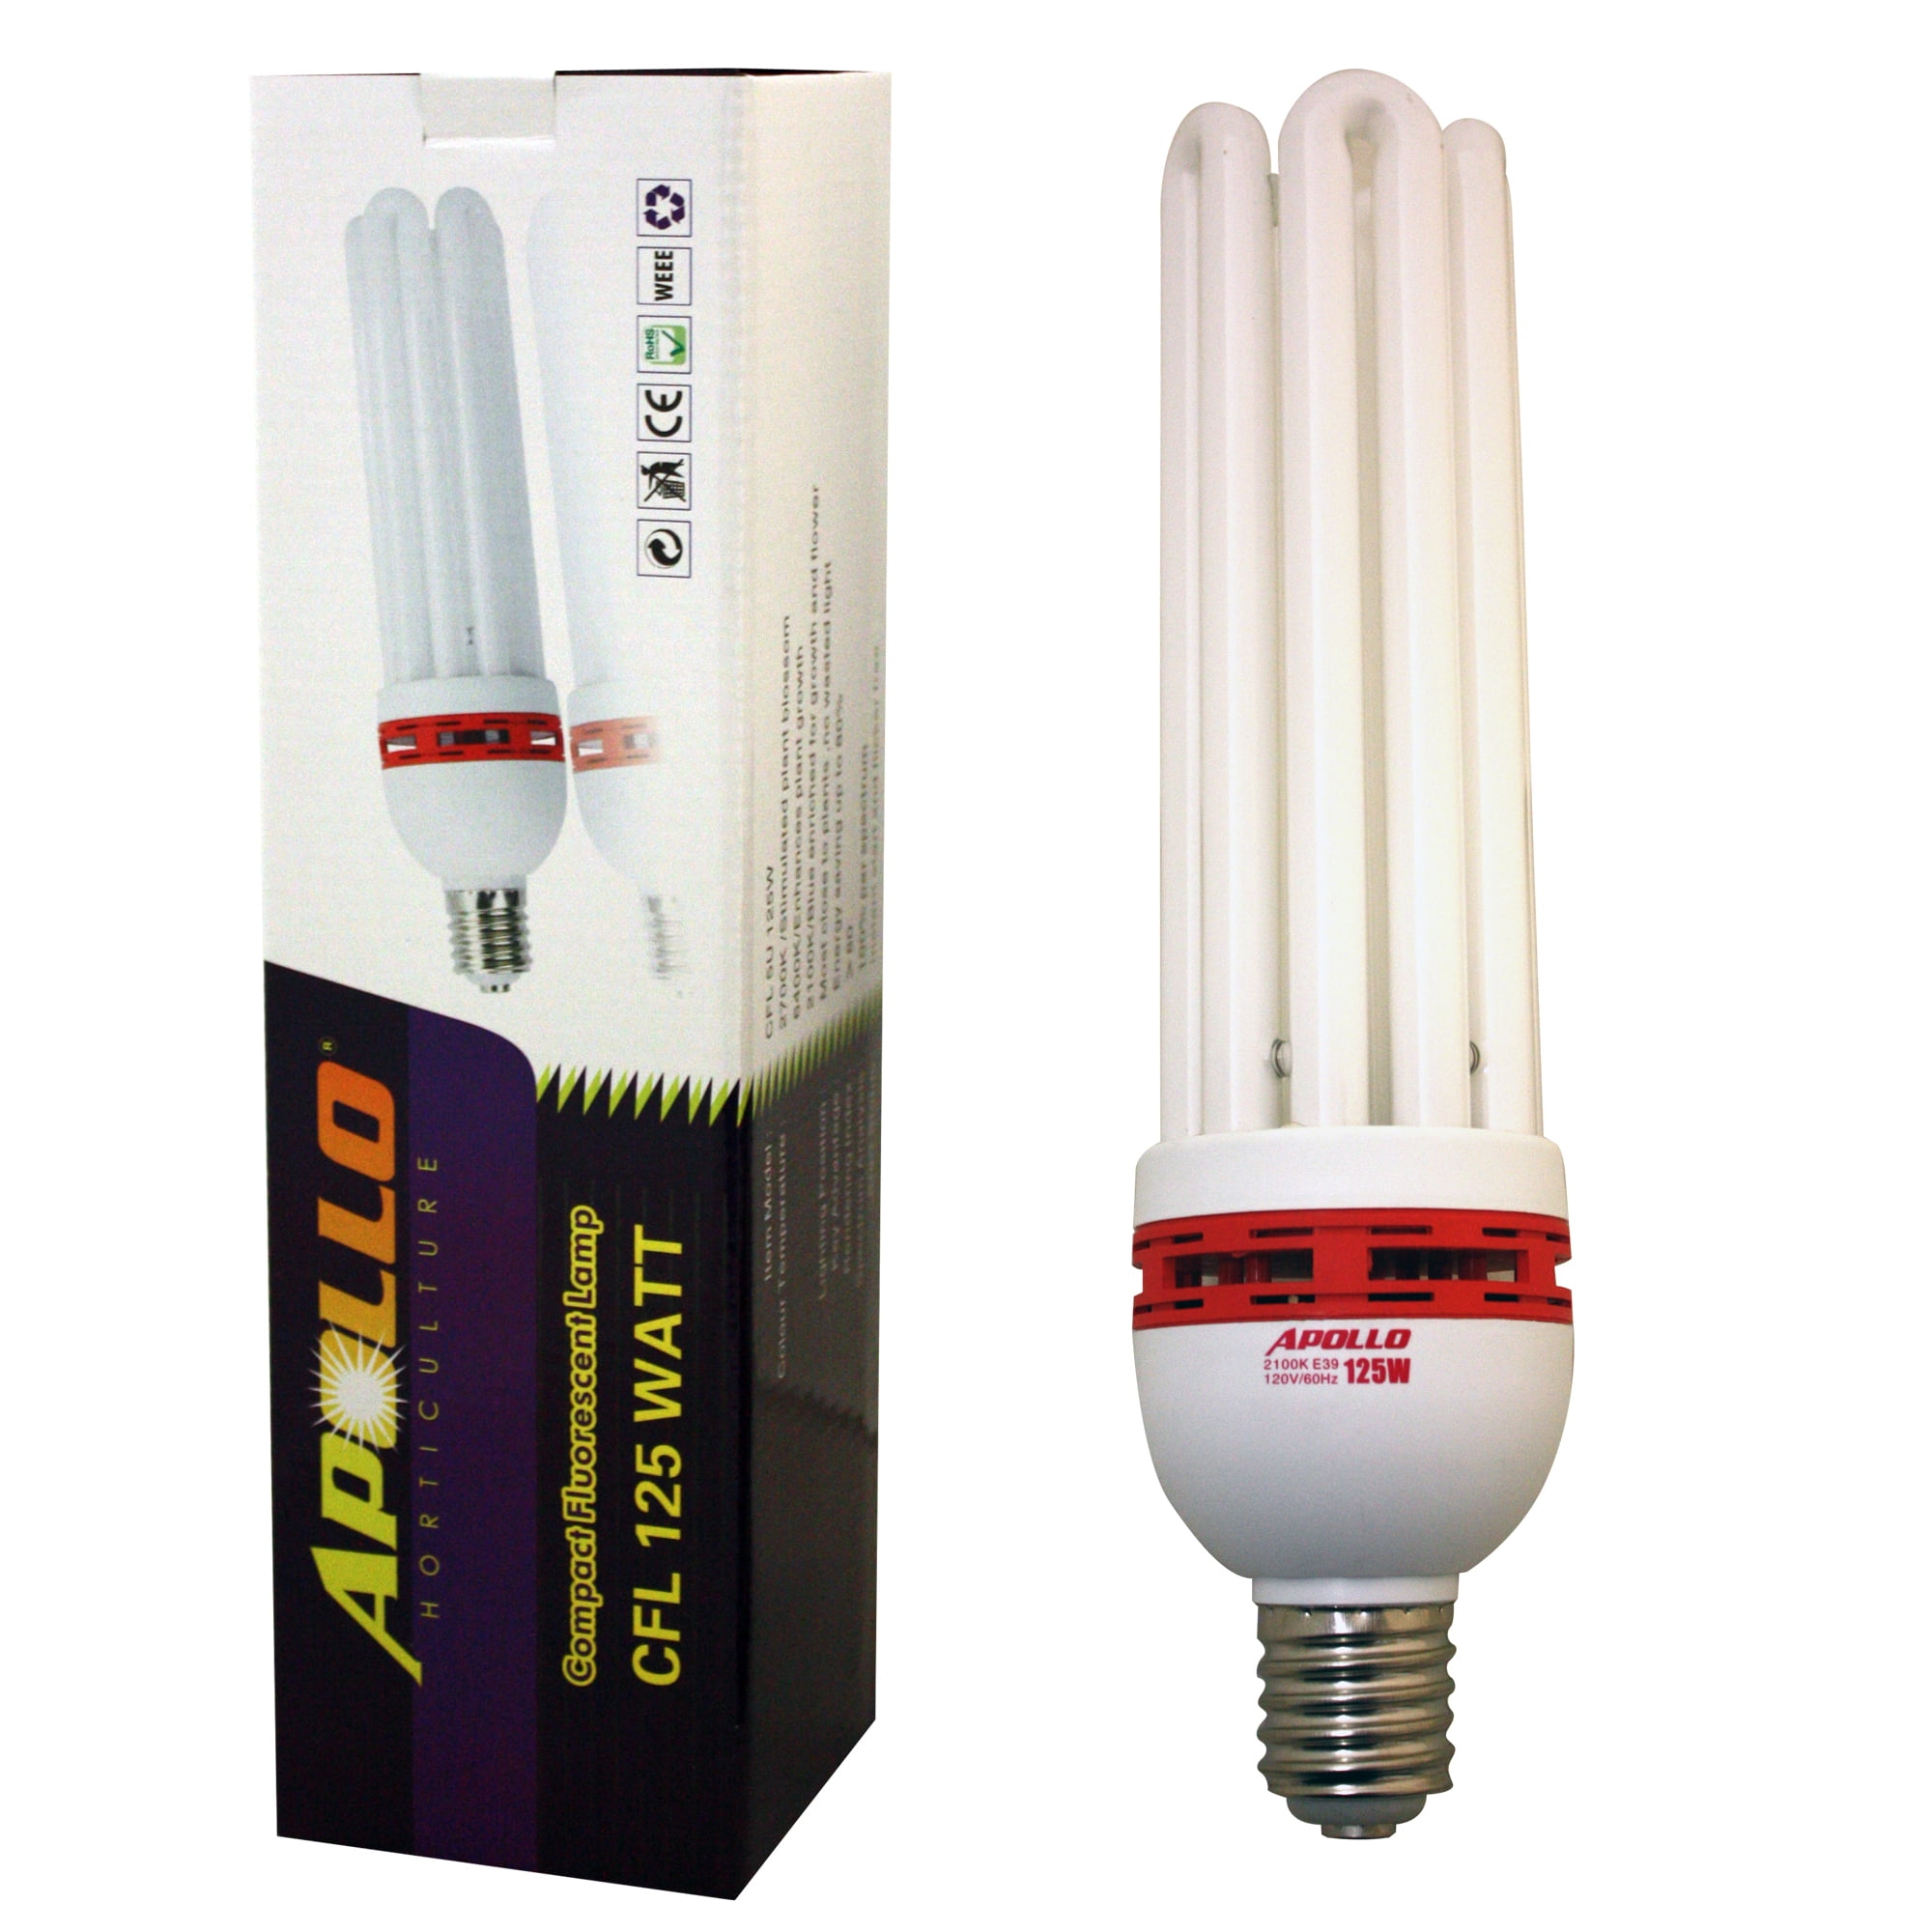 Apollo 125 Watt CFL Compact Fluorescent Grow Light Bulb of 6400K for Plant Growing - Walmart.com